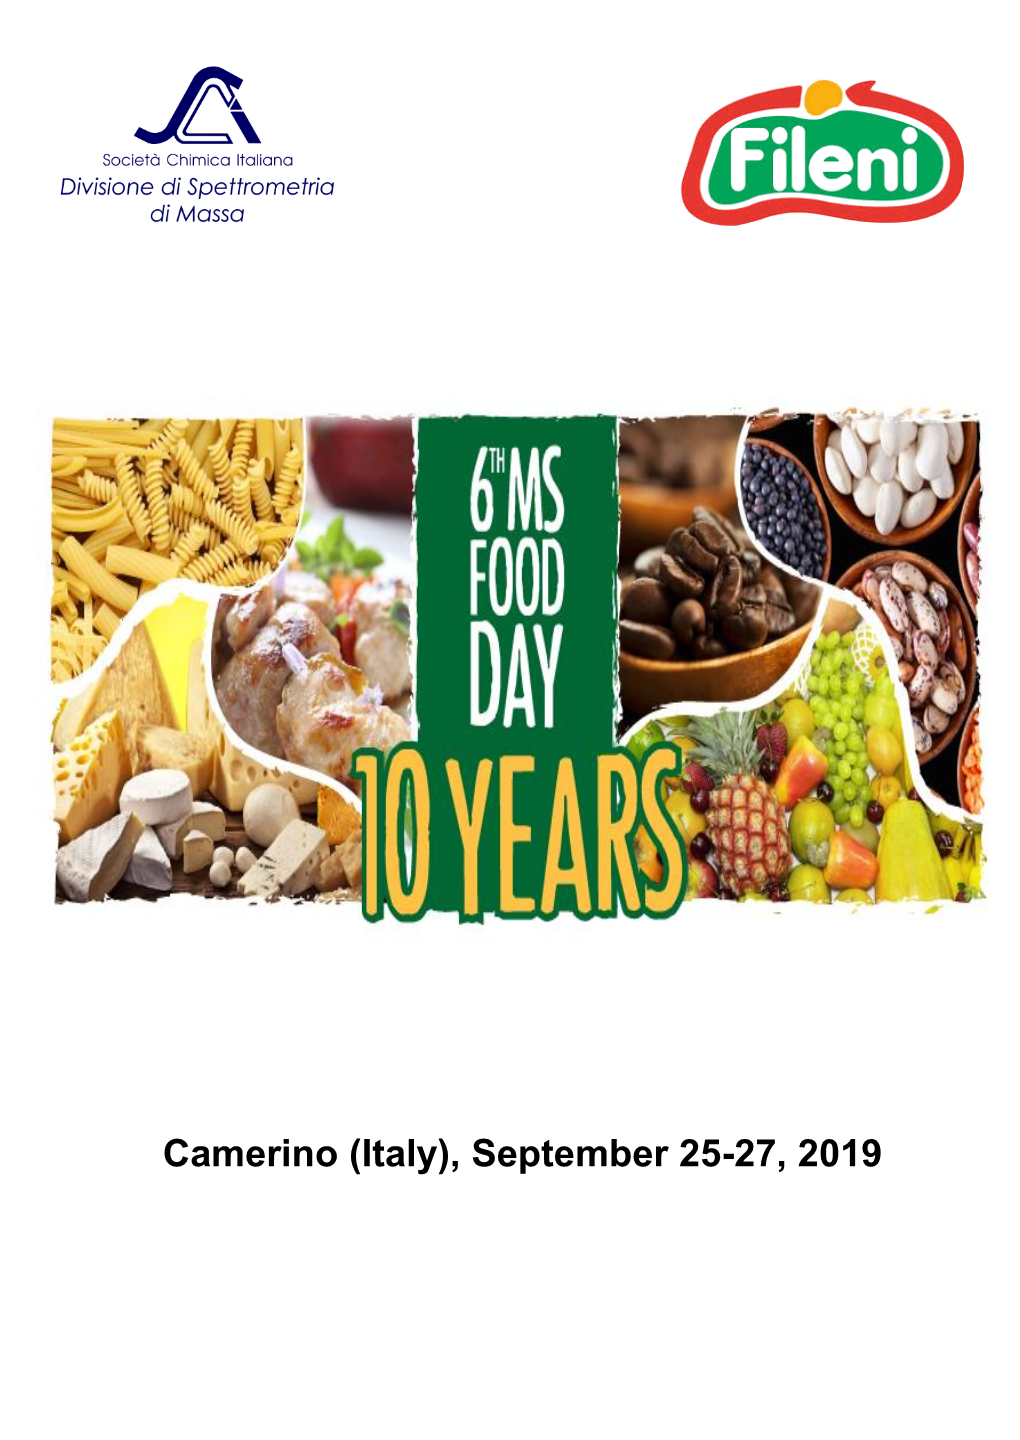 Camerino (Italy), September 25-27, 2019 ______